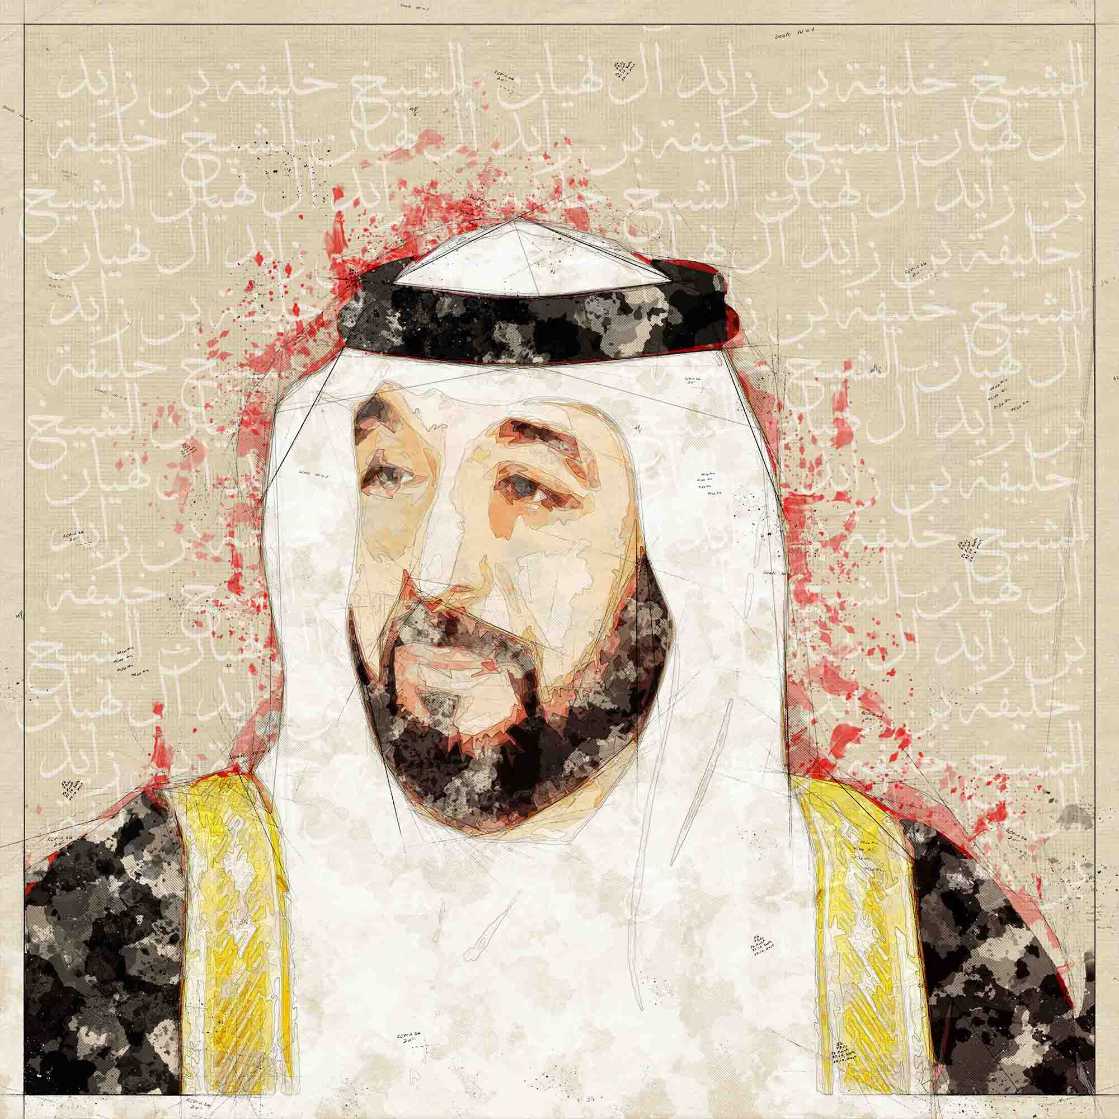 His Highness Sheikh Dr. Sultan bin Muhammad Al Qasimi